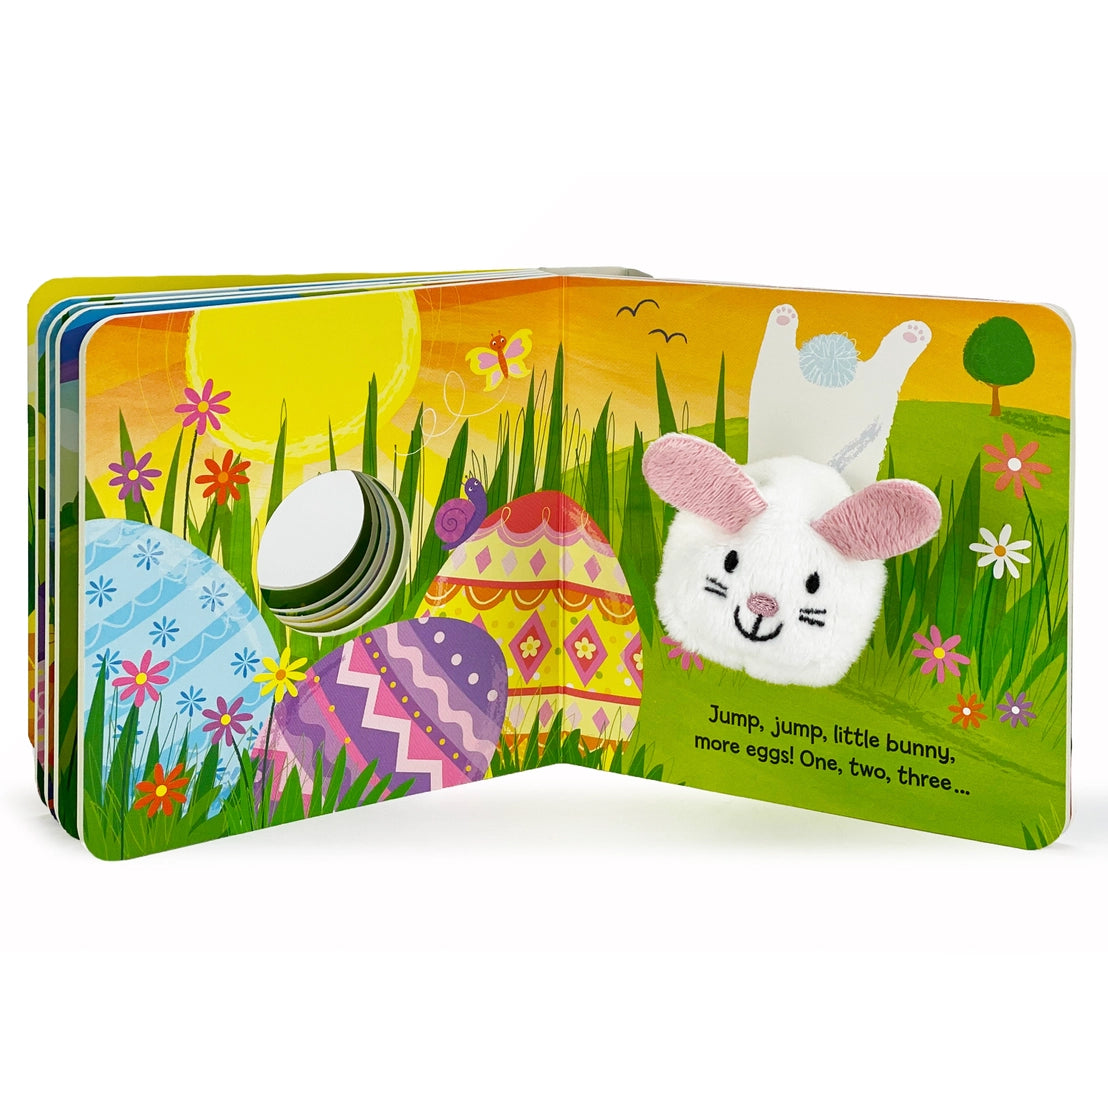 Hippity Hoppity Little Bunny Book  - Doodlebug's Children's Boutique